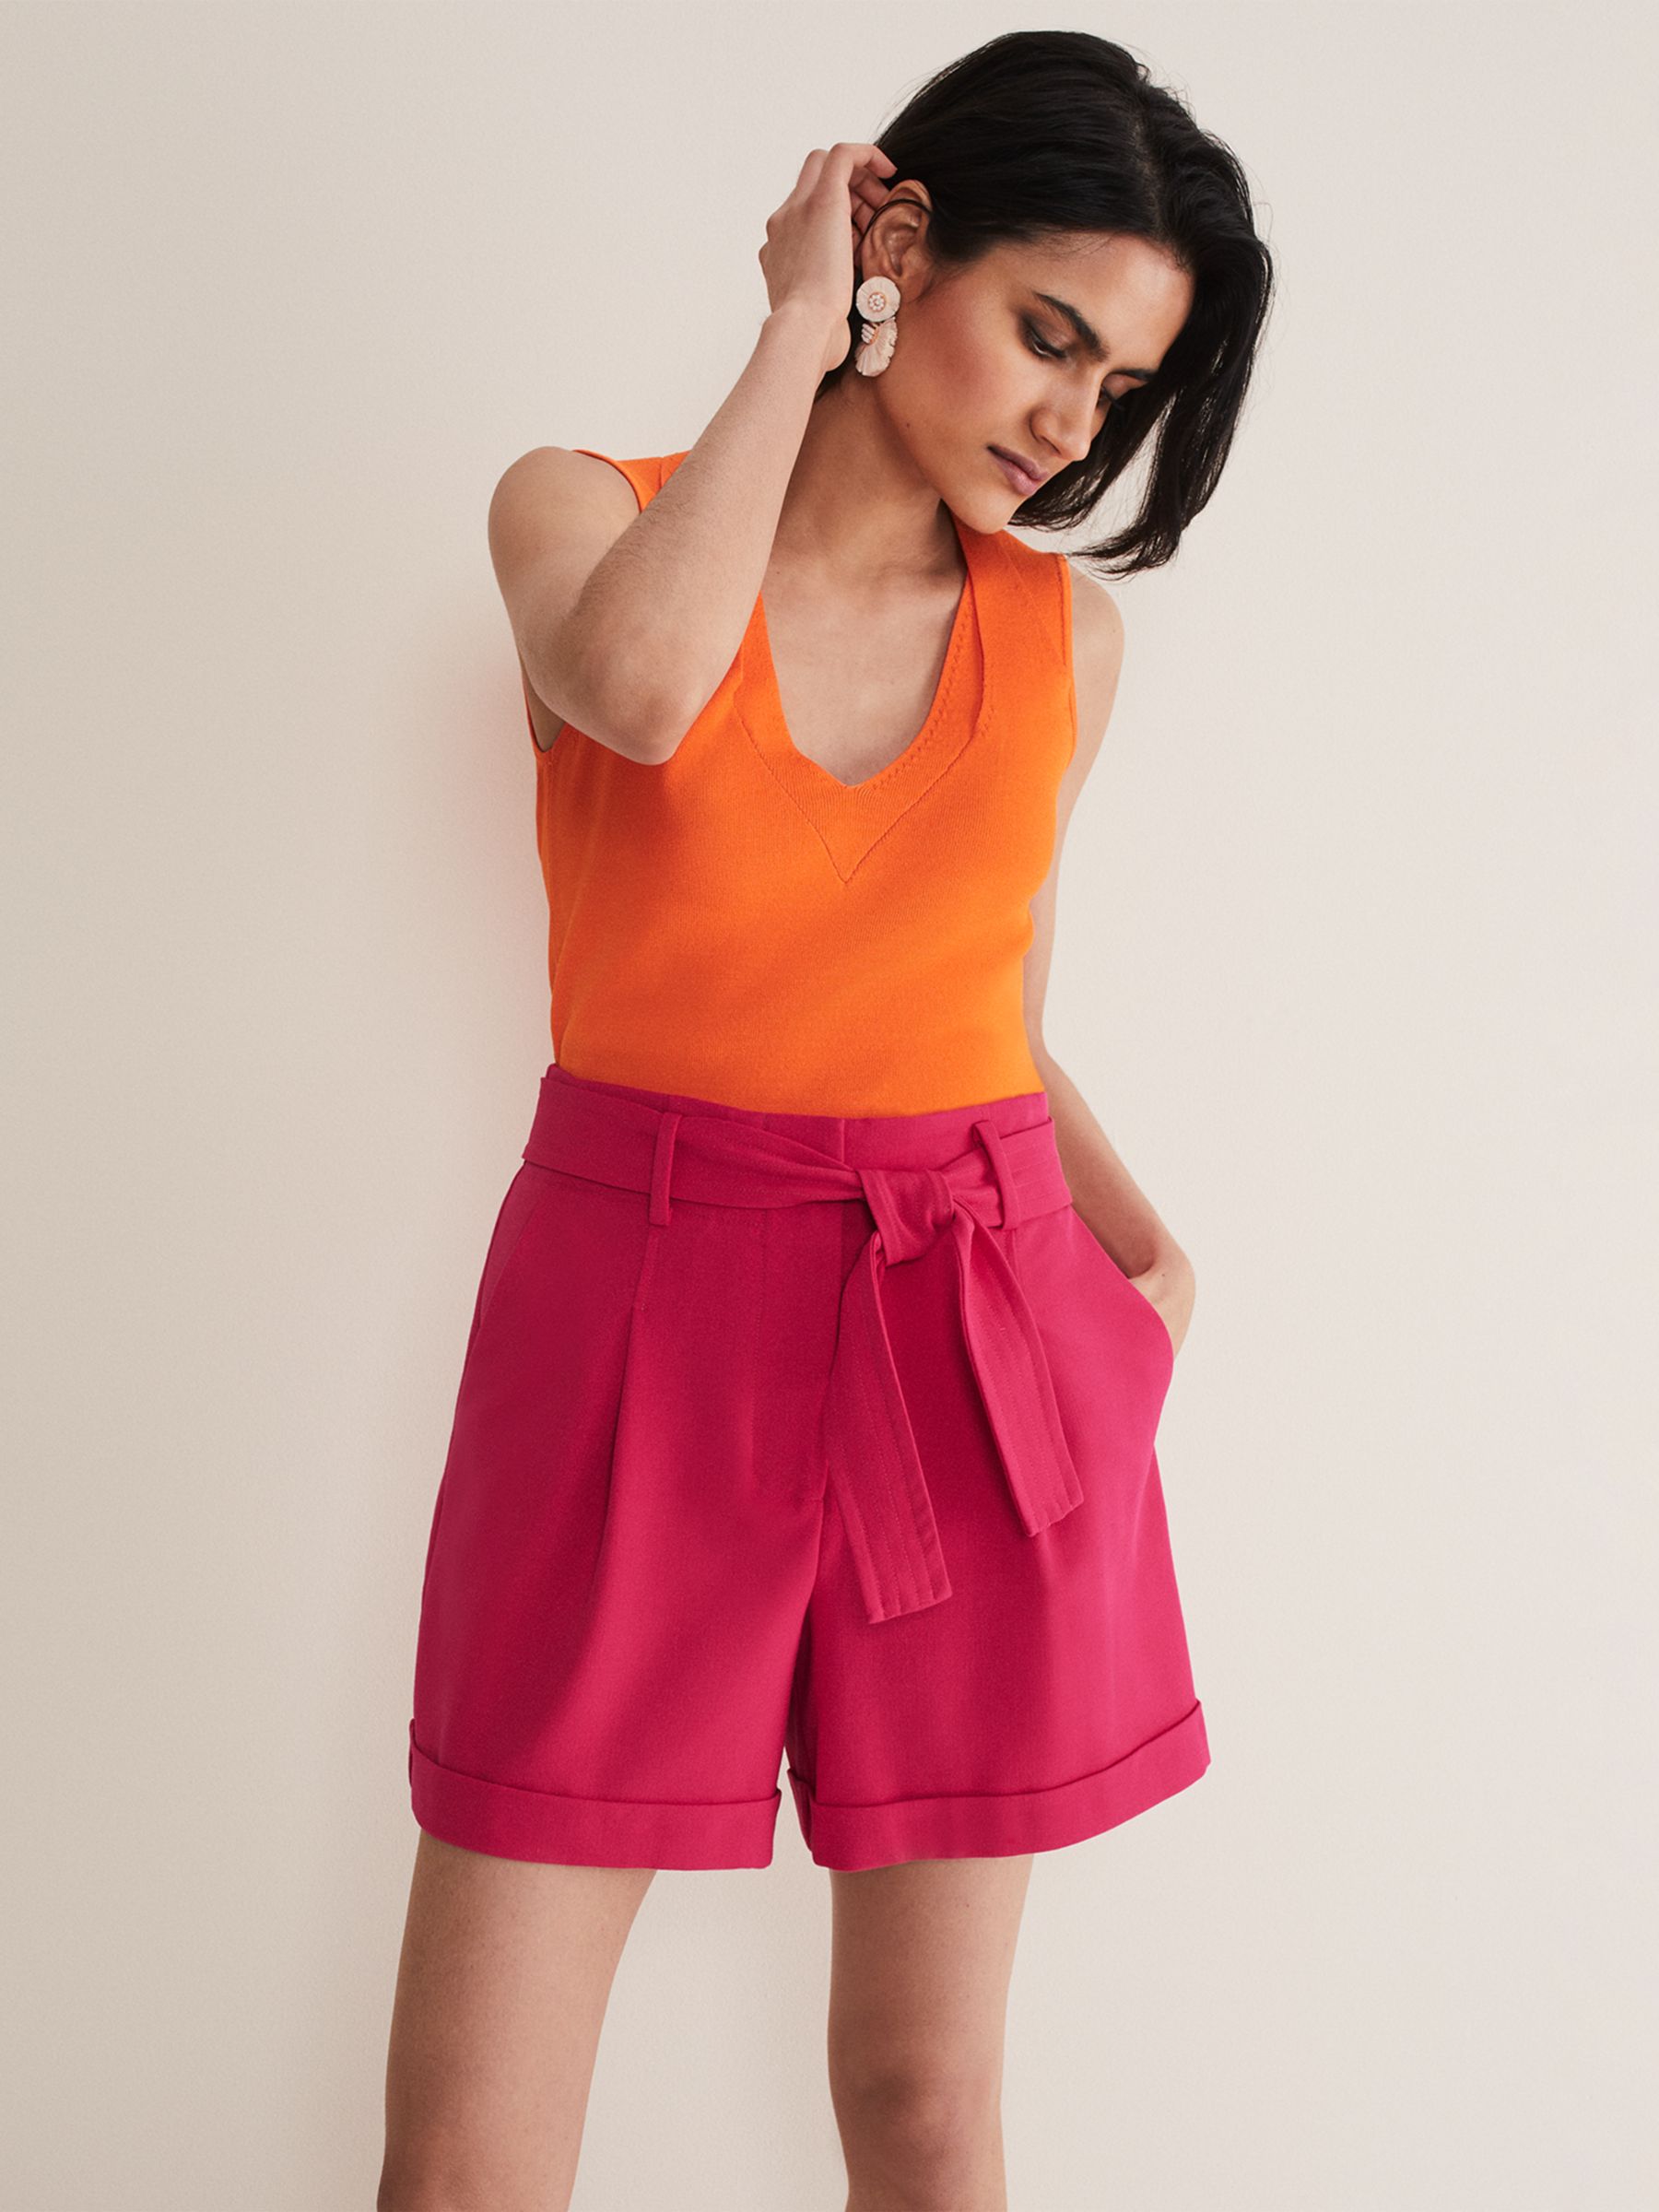 Buy Phase Eight Scarlett Knitted Top, Orange Online at johnlewis.com